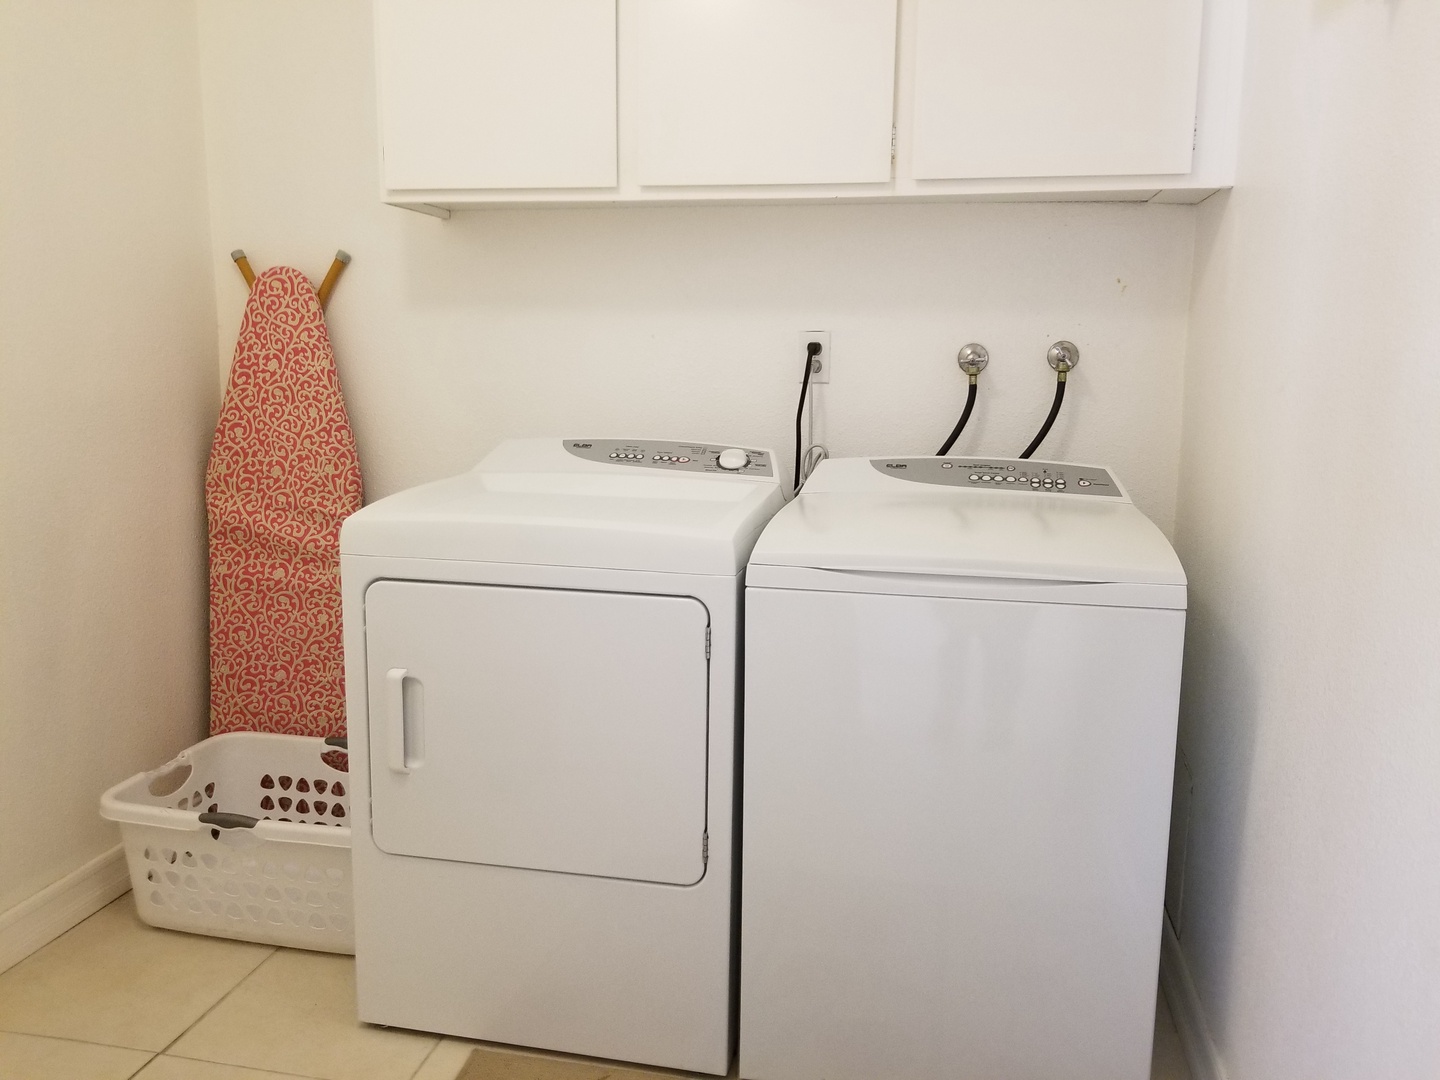 Garage Access through Laundry Room